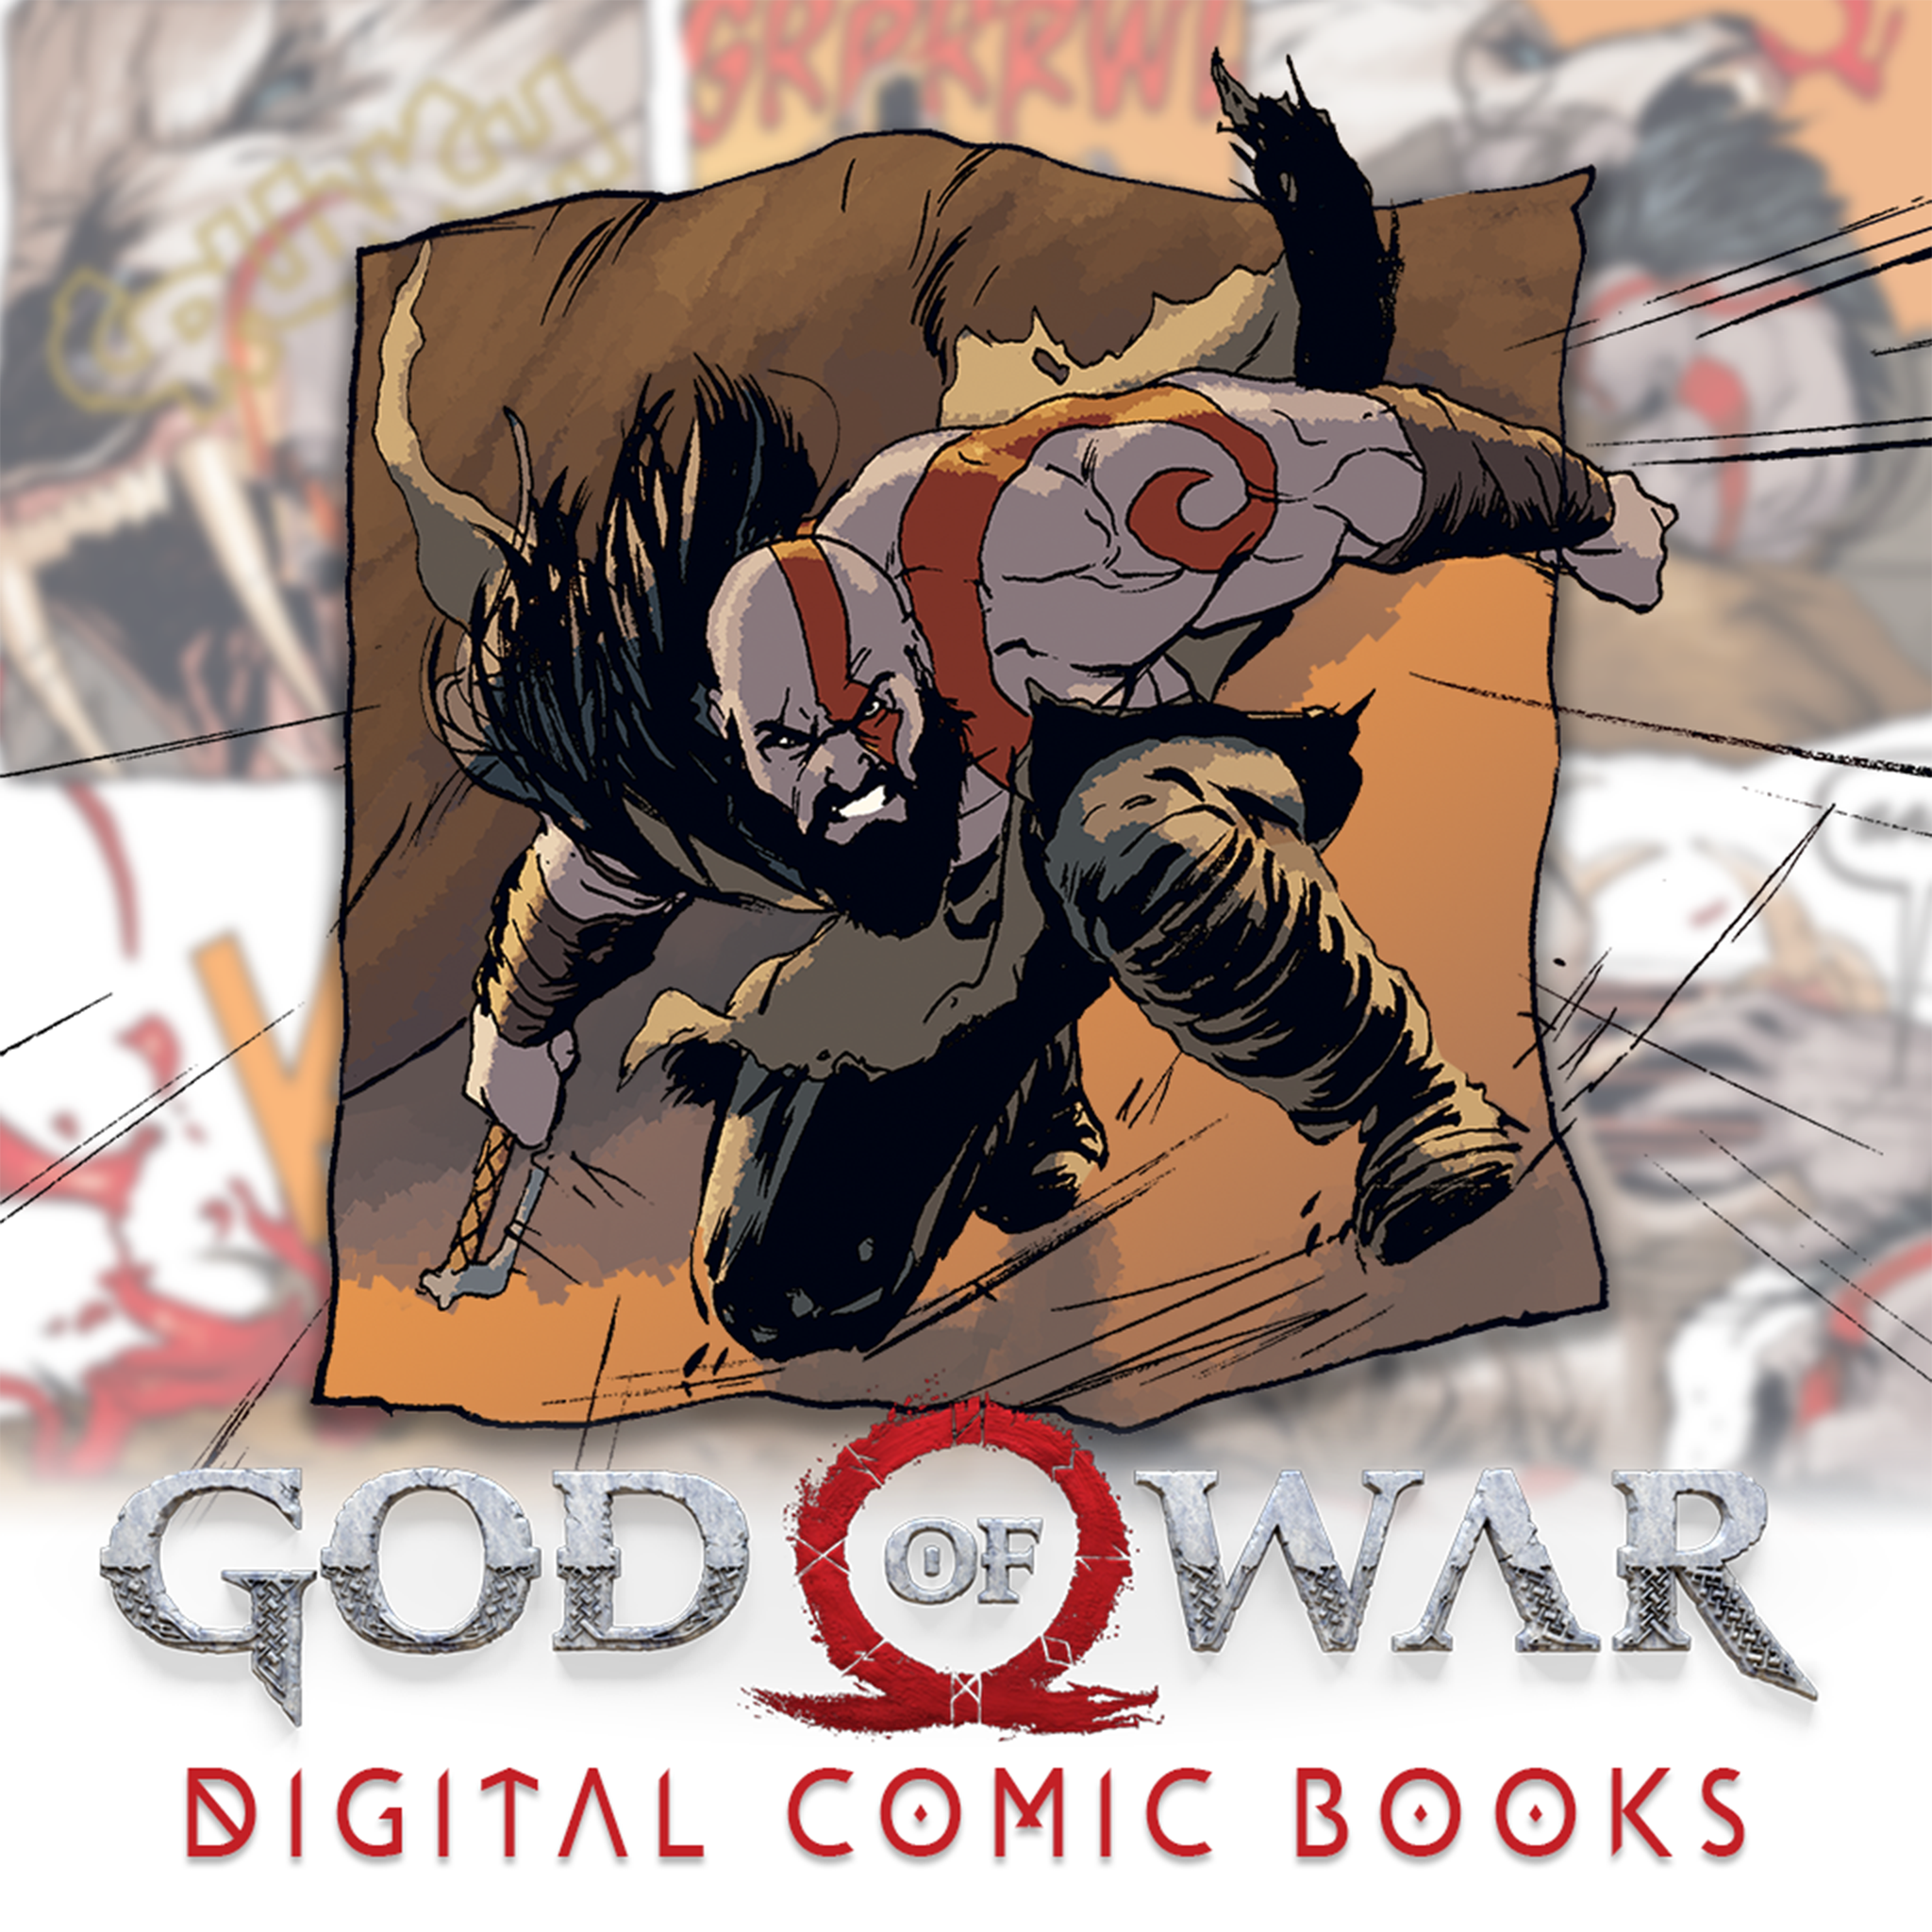 God of war prequel comic